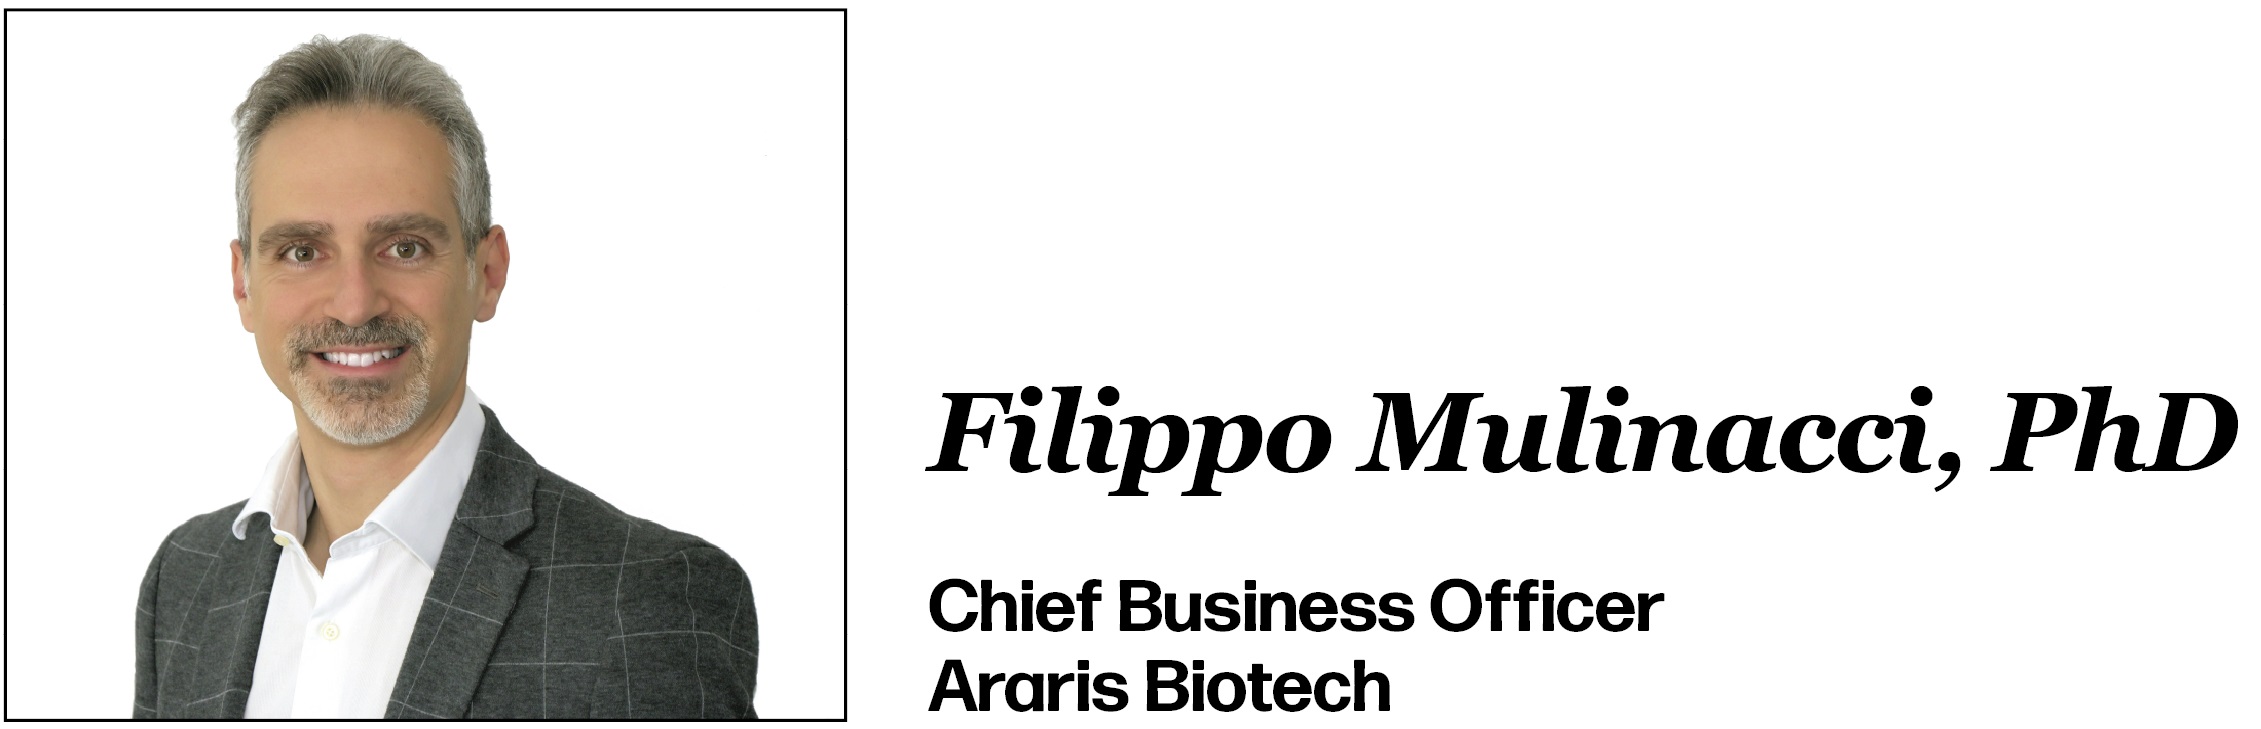 Filippo Mulinacci, PhD, MBA Chief Business Officer Araris Biotech